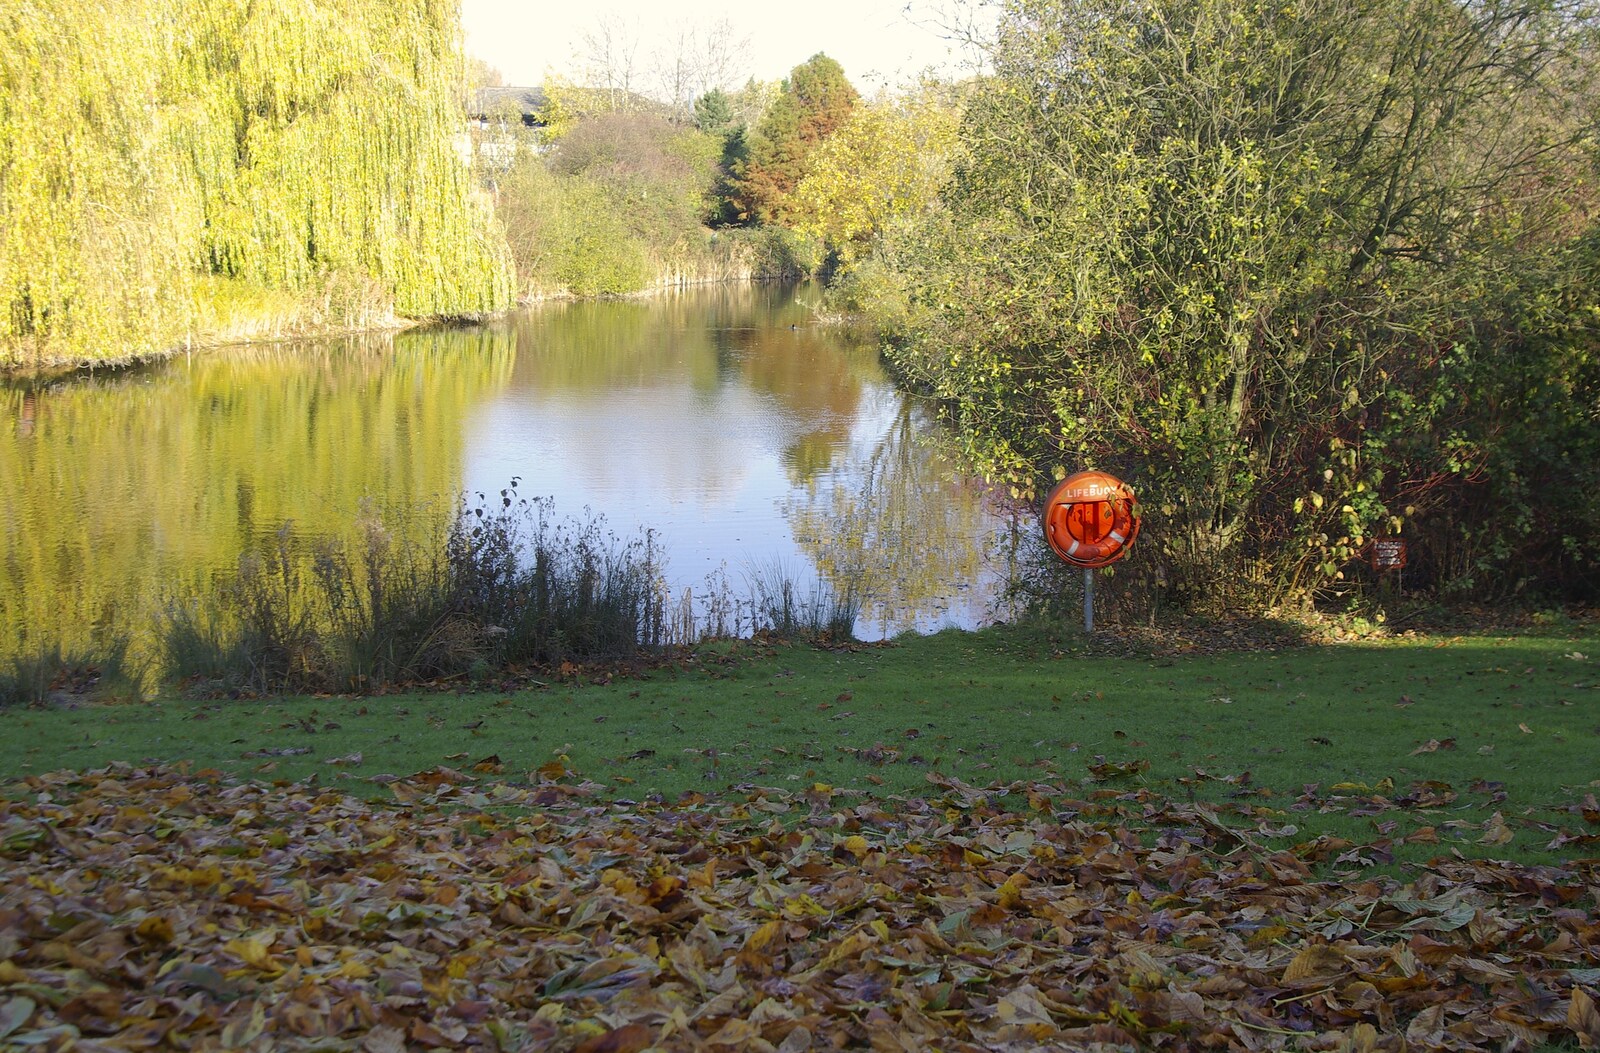 Isobel and the Science Park Fun Run, Milton Road, Cambridge - 16th November 2007: The Science Park lake